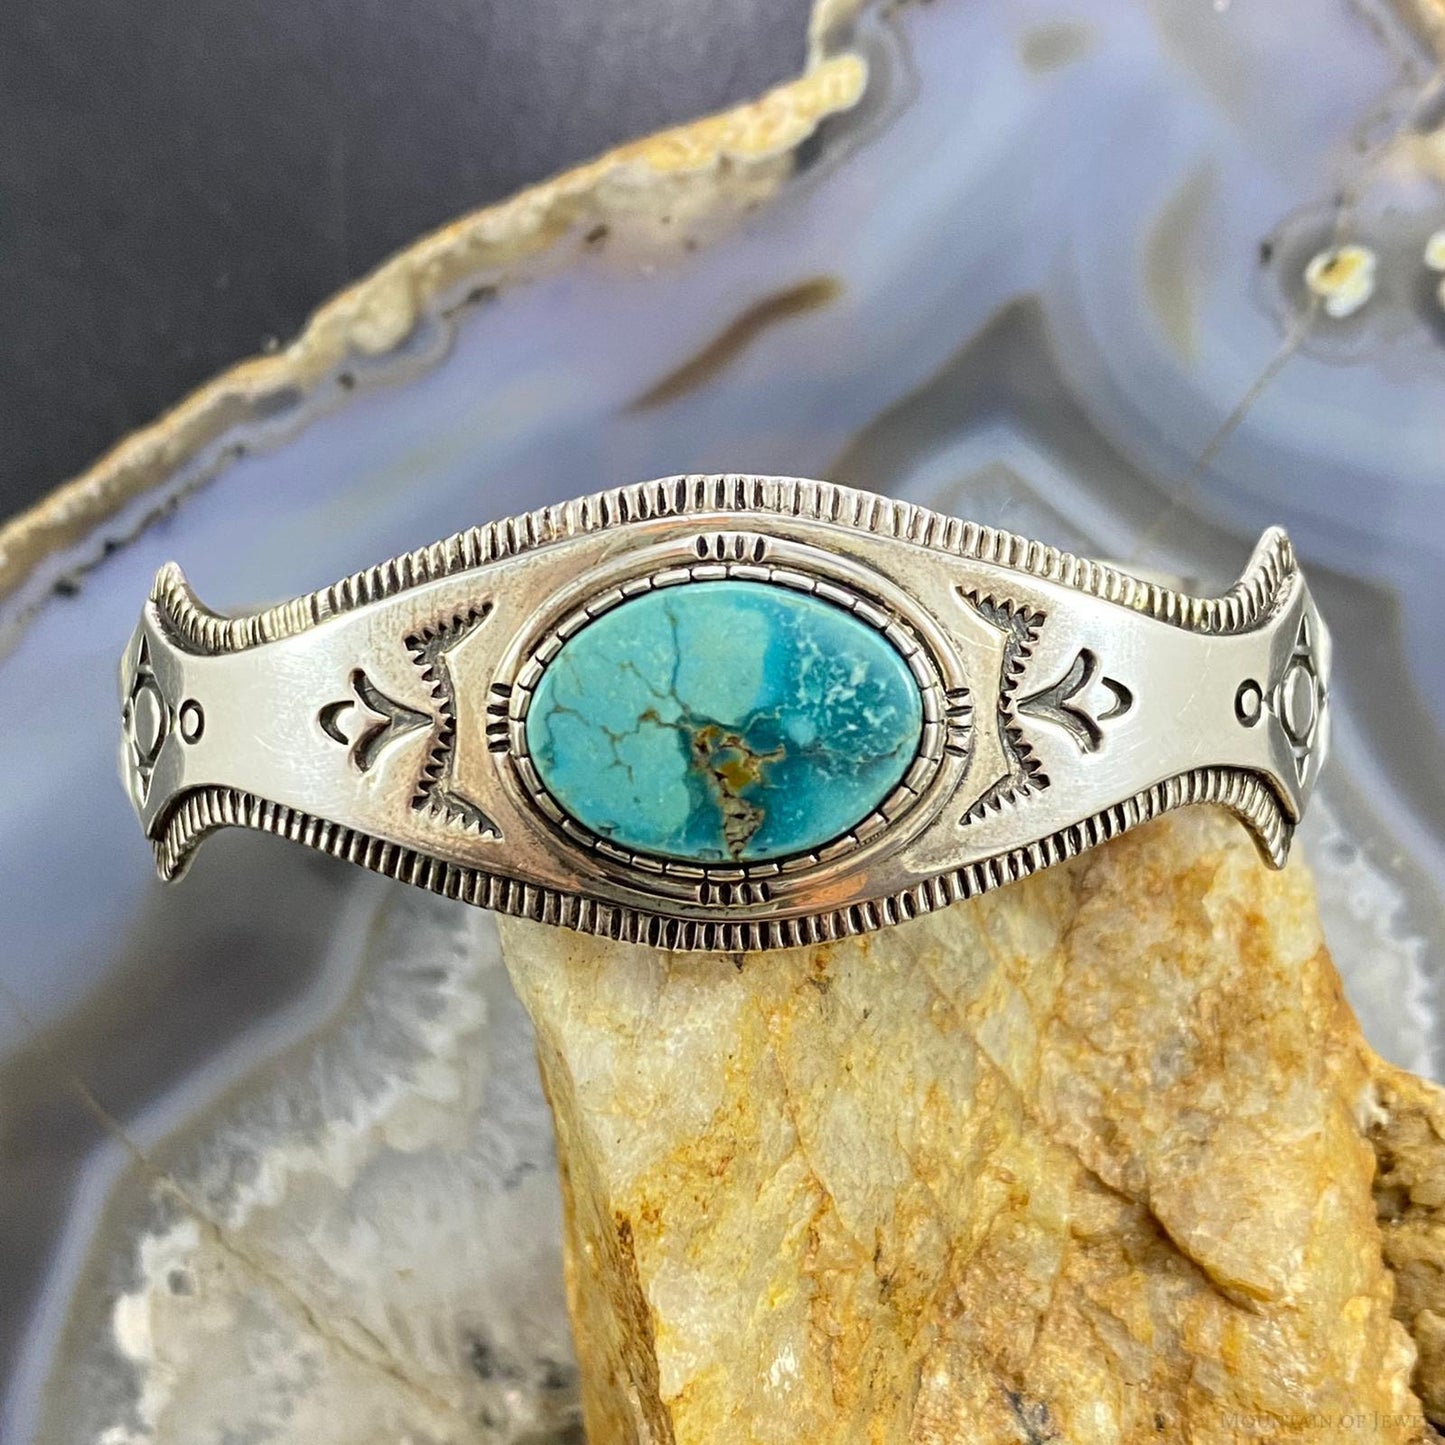 Leonard Gene Vintage Sterling Silver Overlay Oval Turquoise Bracelet For Women